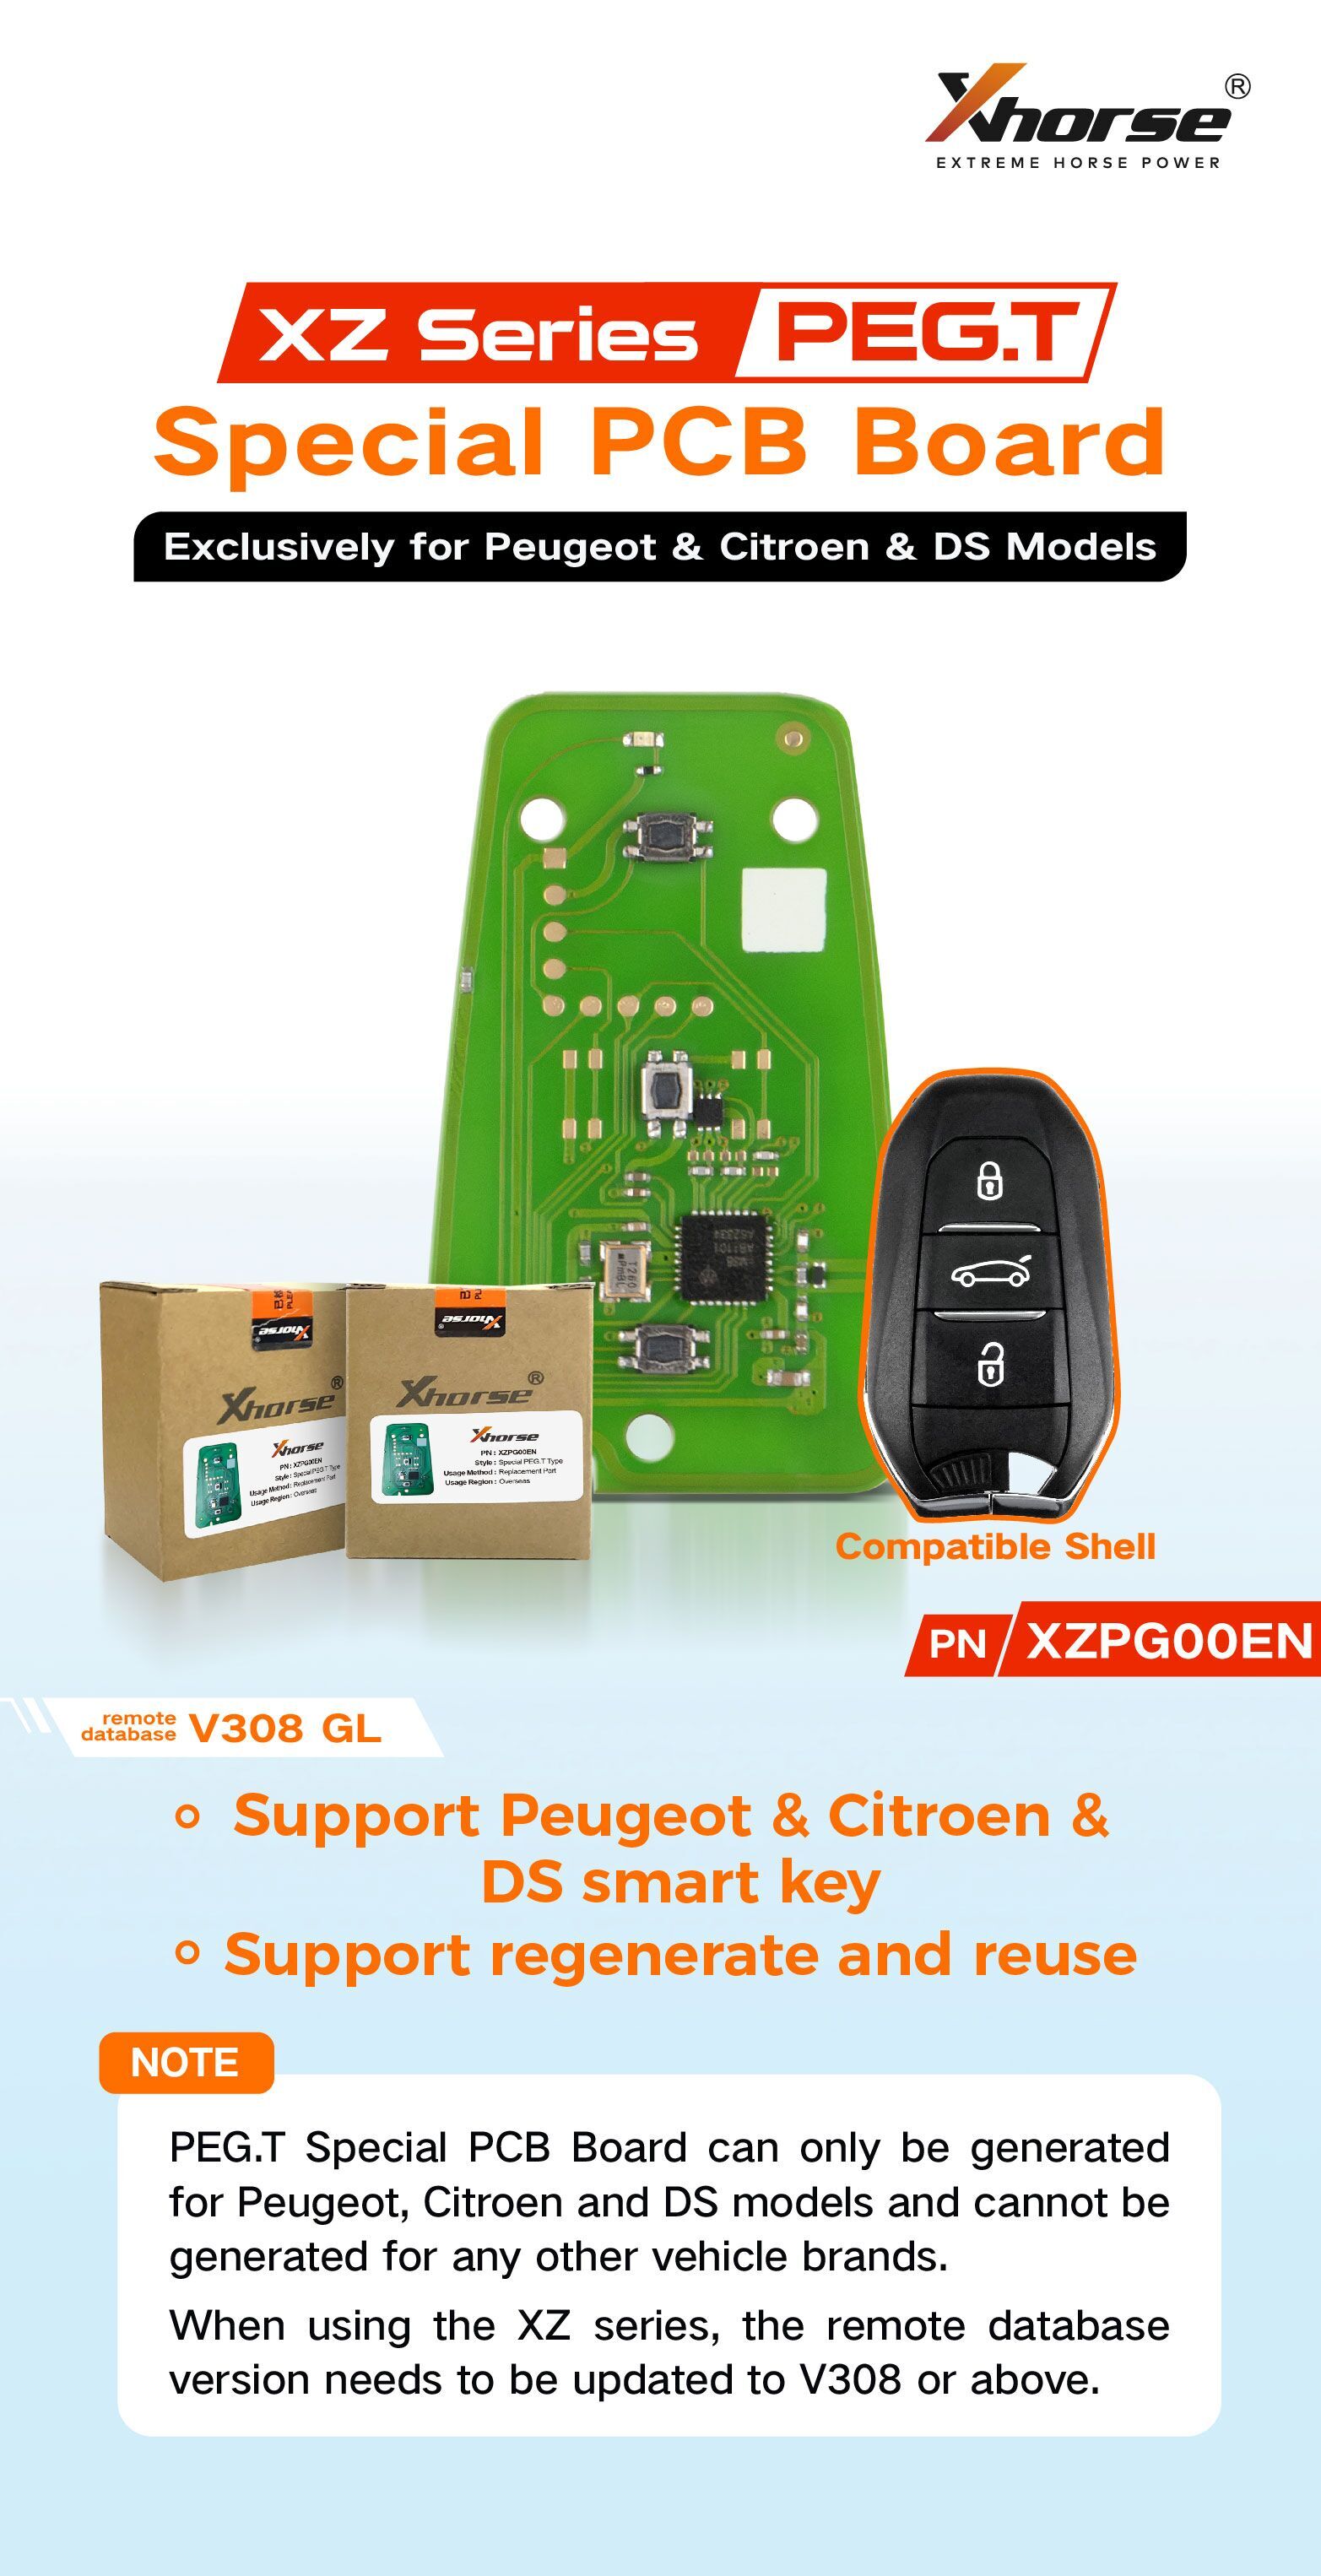 XHORSE XZPG00EN Special PCB Board Exclusively for Peugeot citroen DS models 5pcs/lot